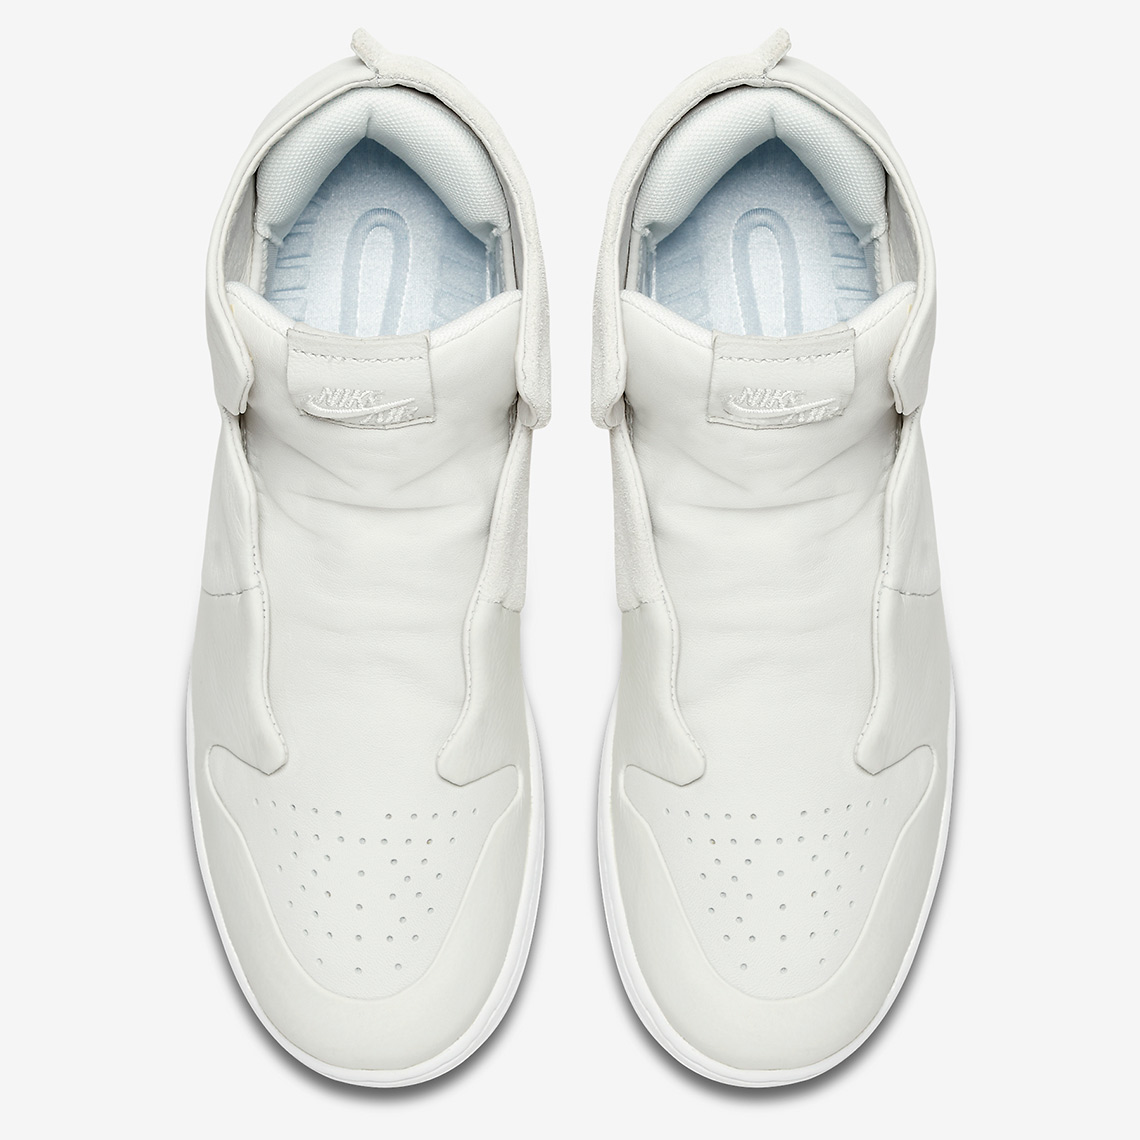 Air Jordan 1 Reimagined Collection Release Date | SneakerNews.com